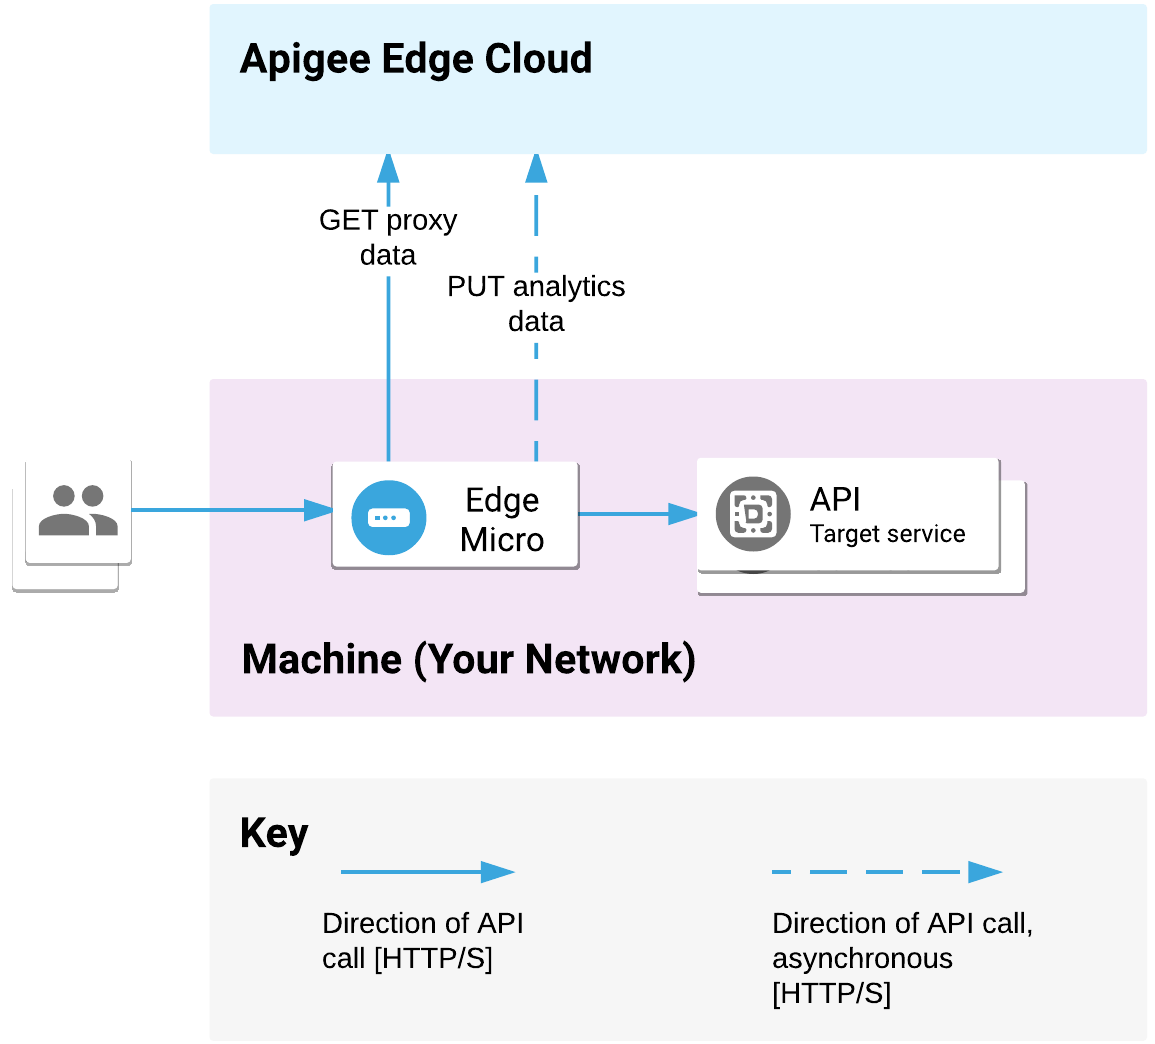 Apigee Edge Microgateway: install it on the same machine